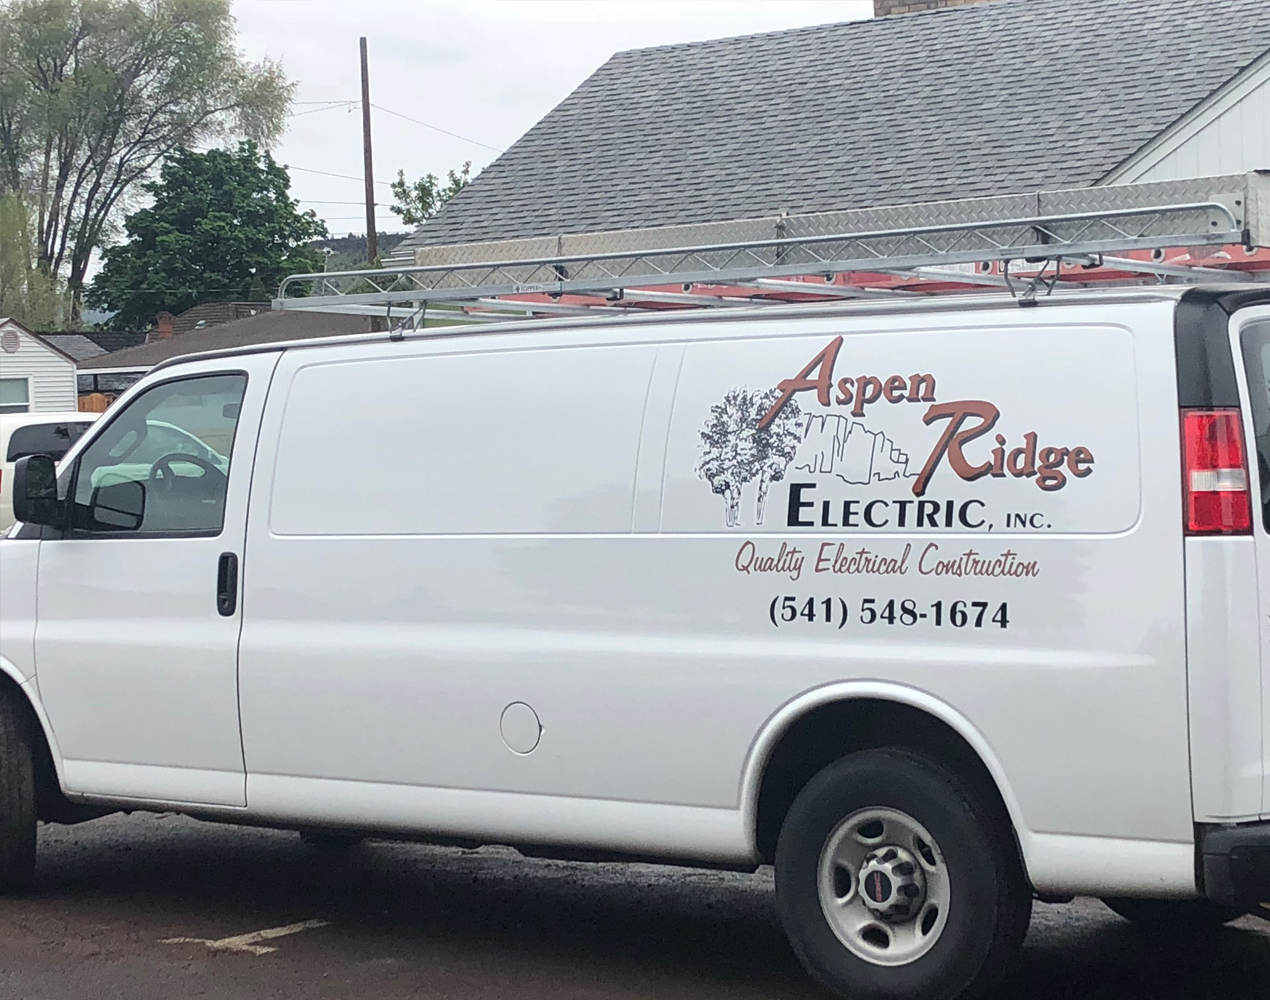 About Aspen Ridge Electric, Inc.